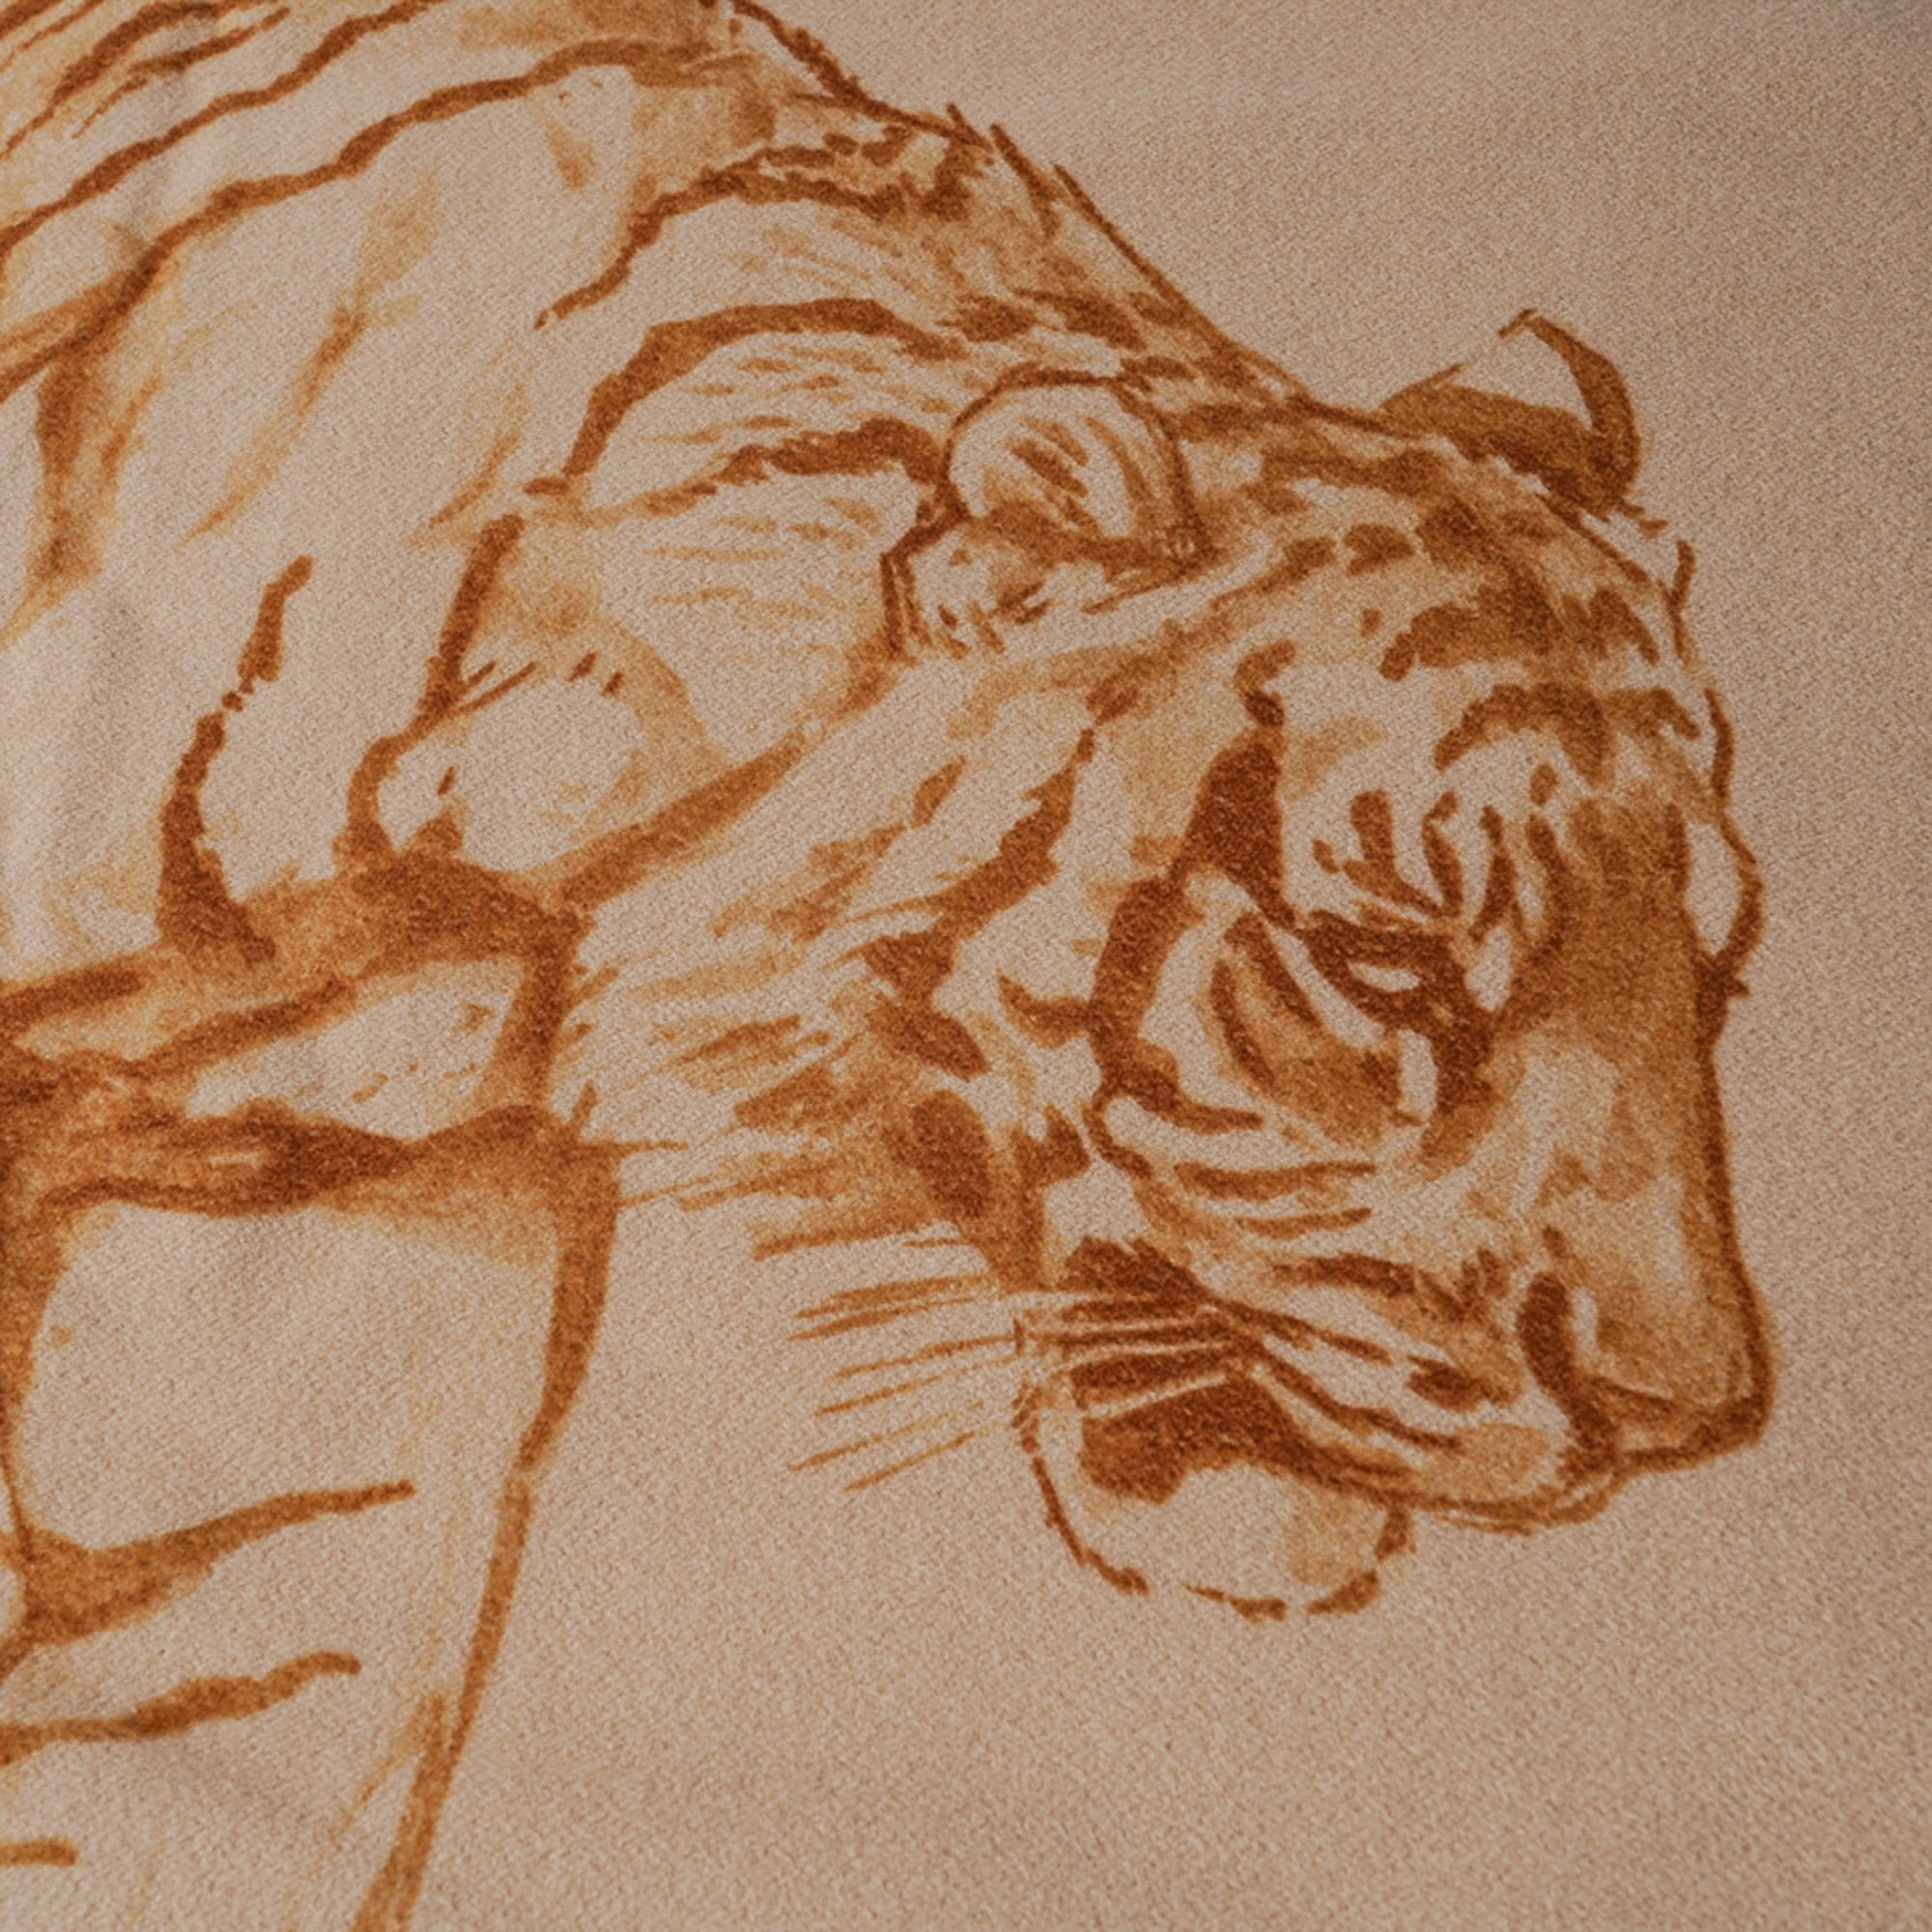 Hermes Croquis De Tigre Blanket Naturel Cashmere New w/ Box